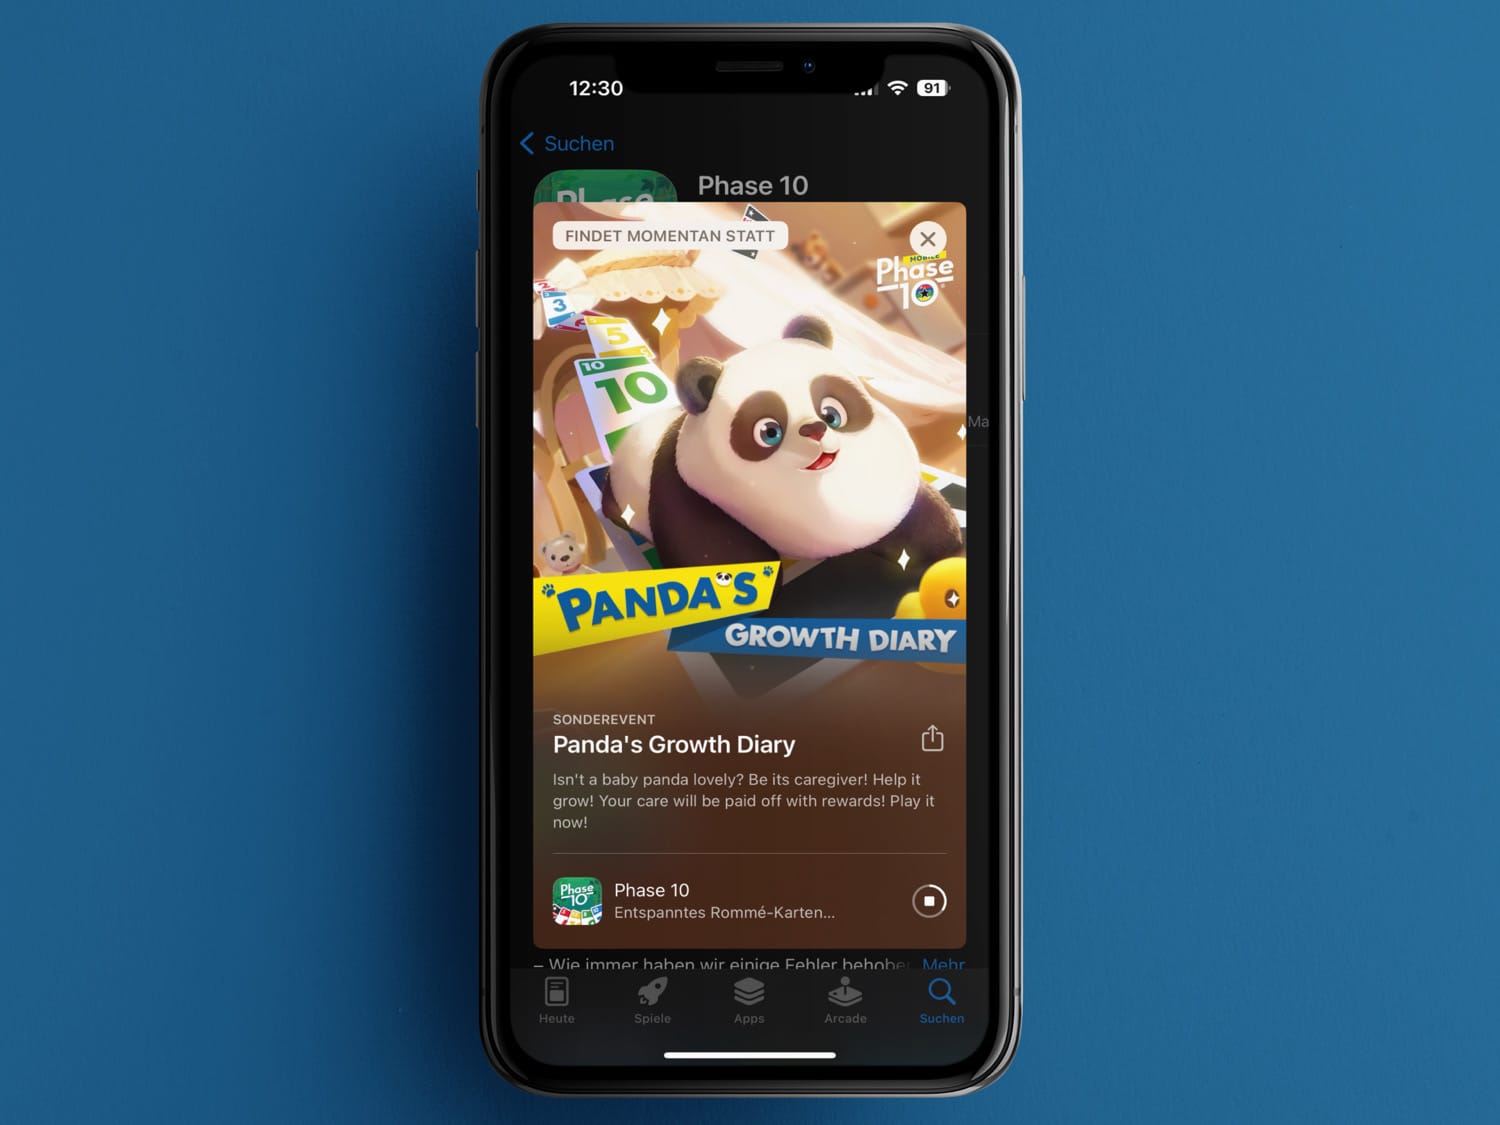 iPhone-Mockup mit Infos zum Panda-Event in Phase 10